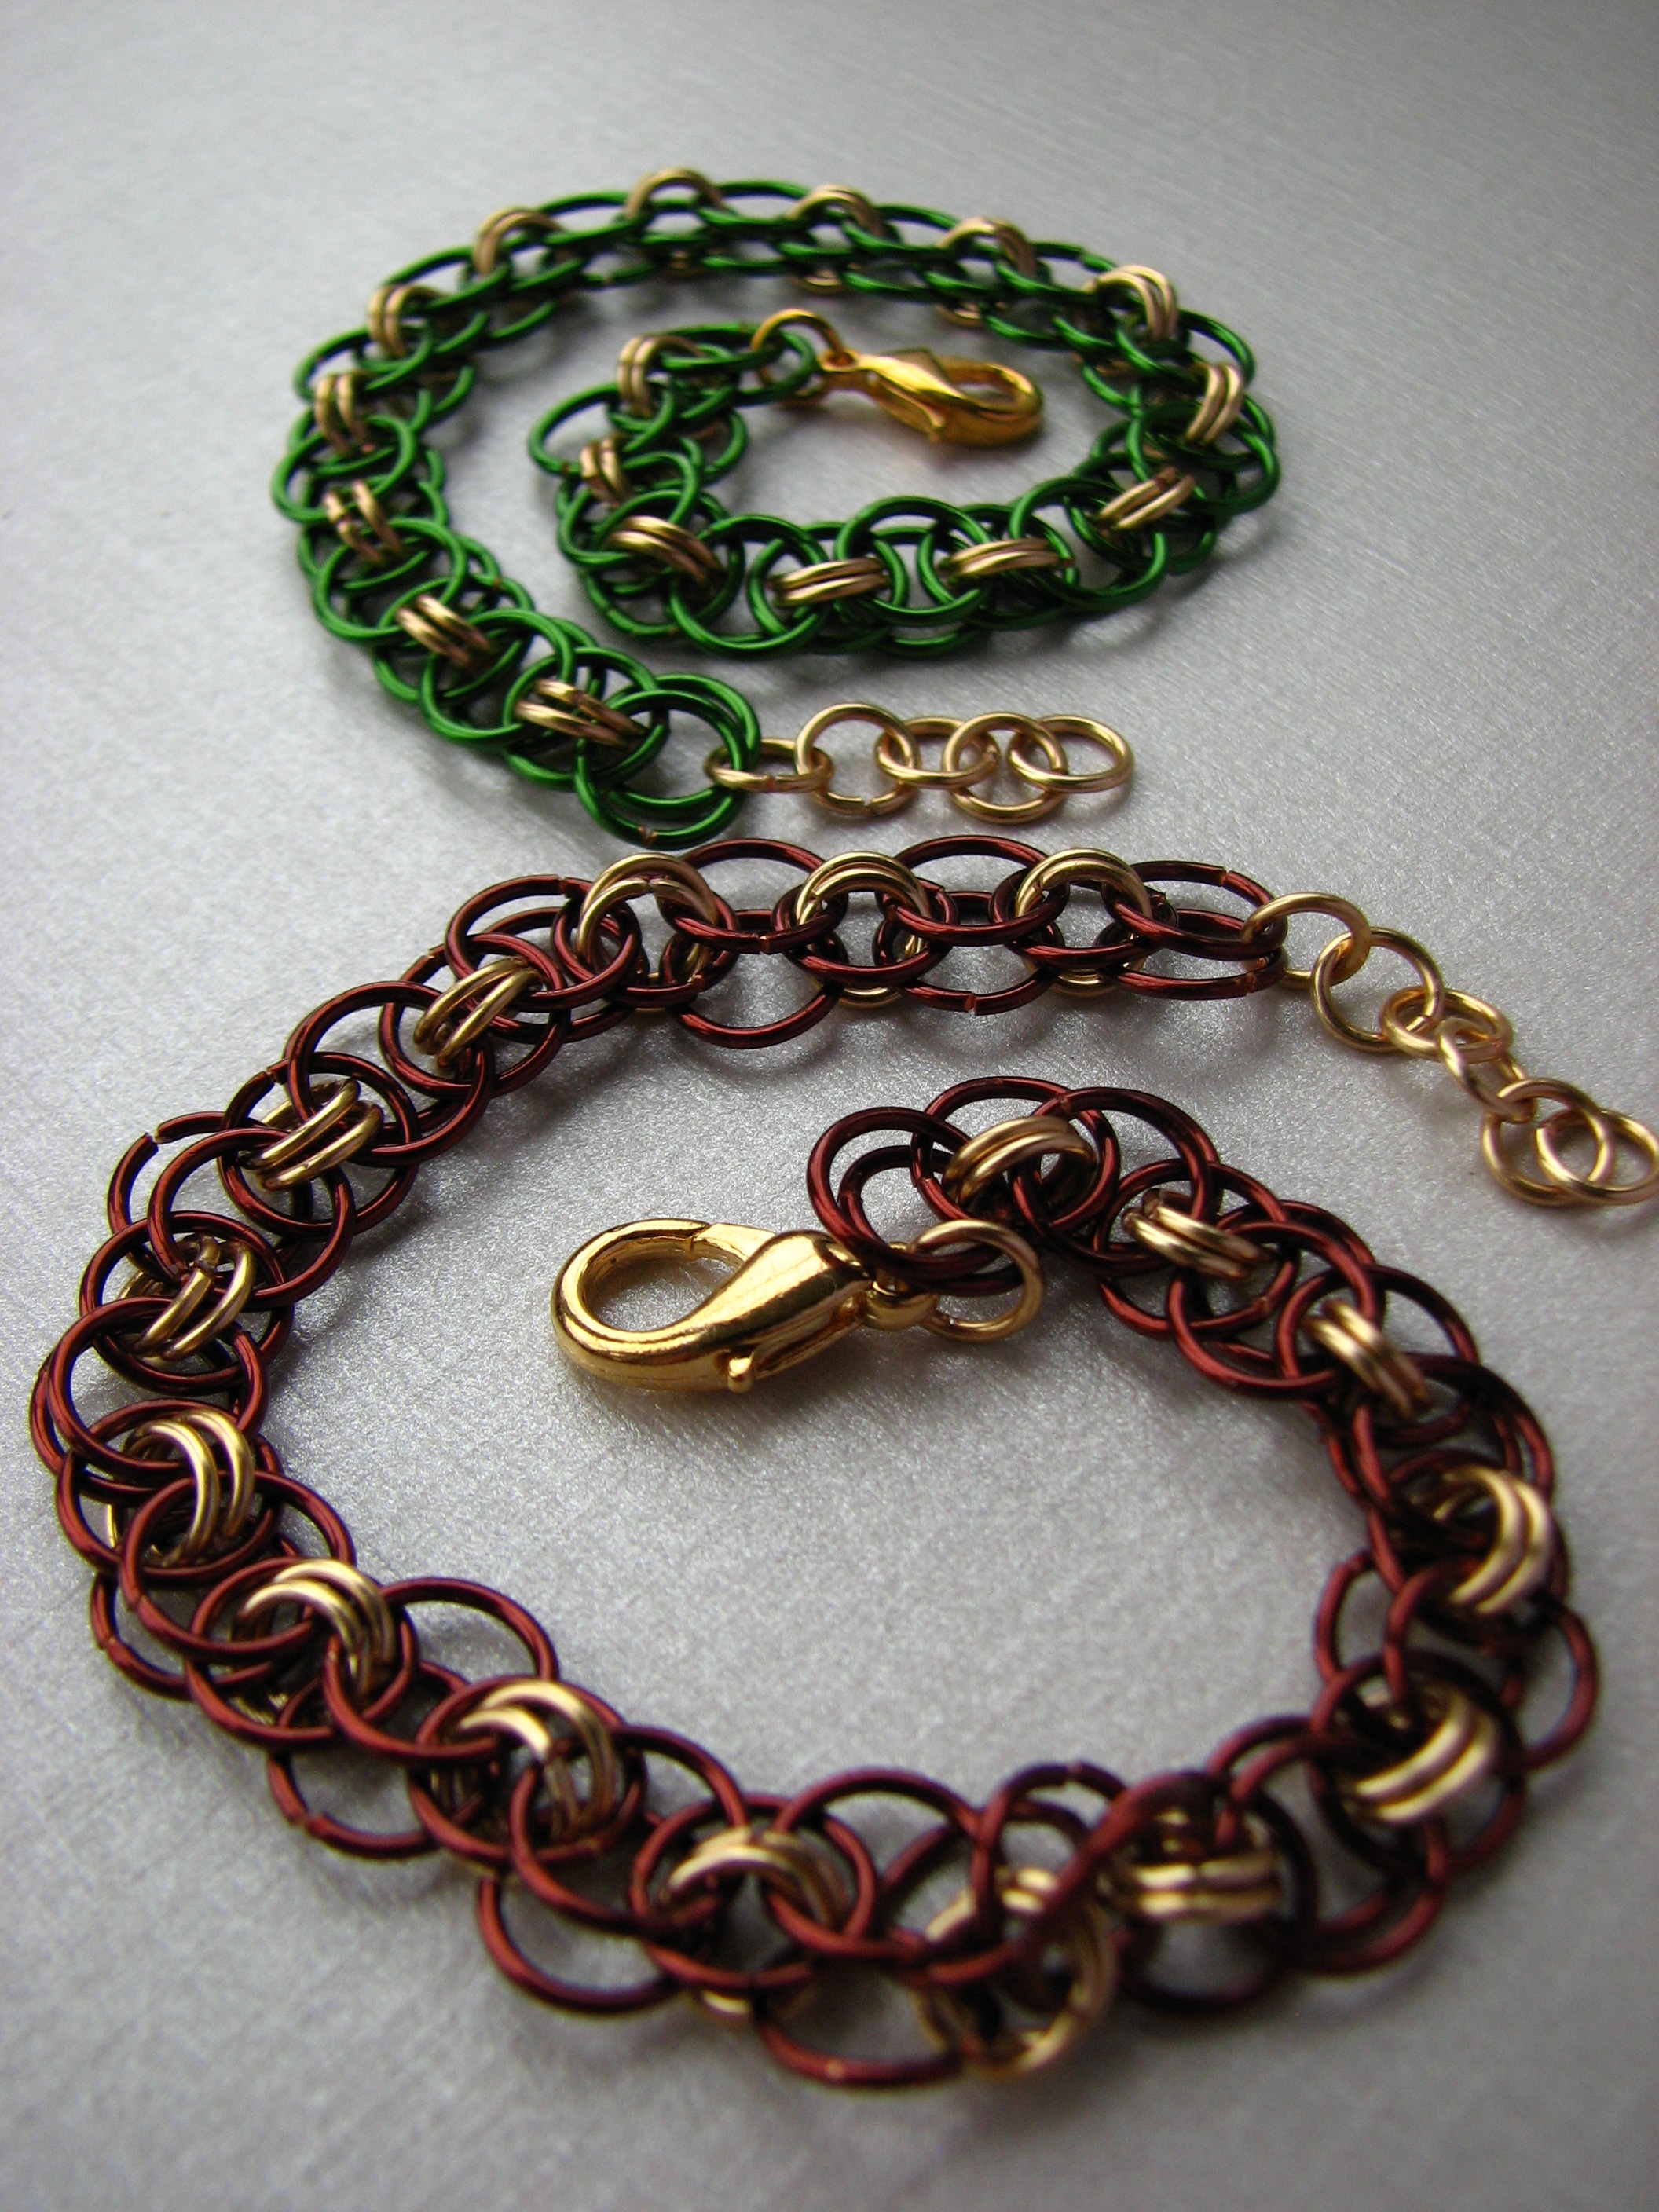 Chain Maille bracelet